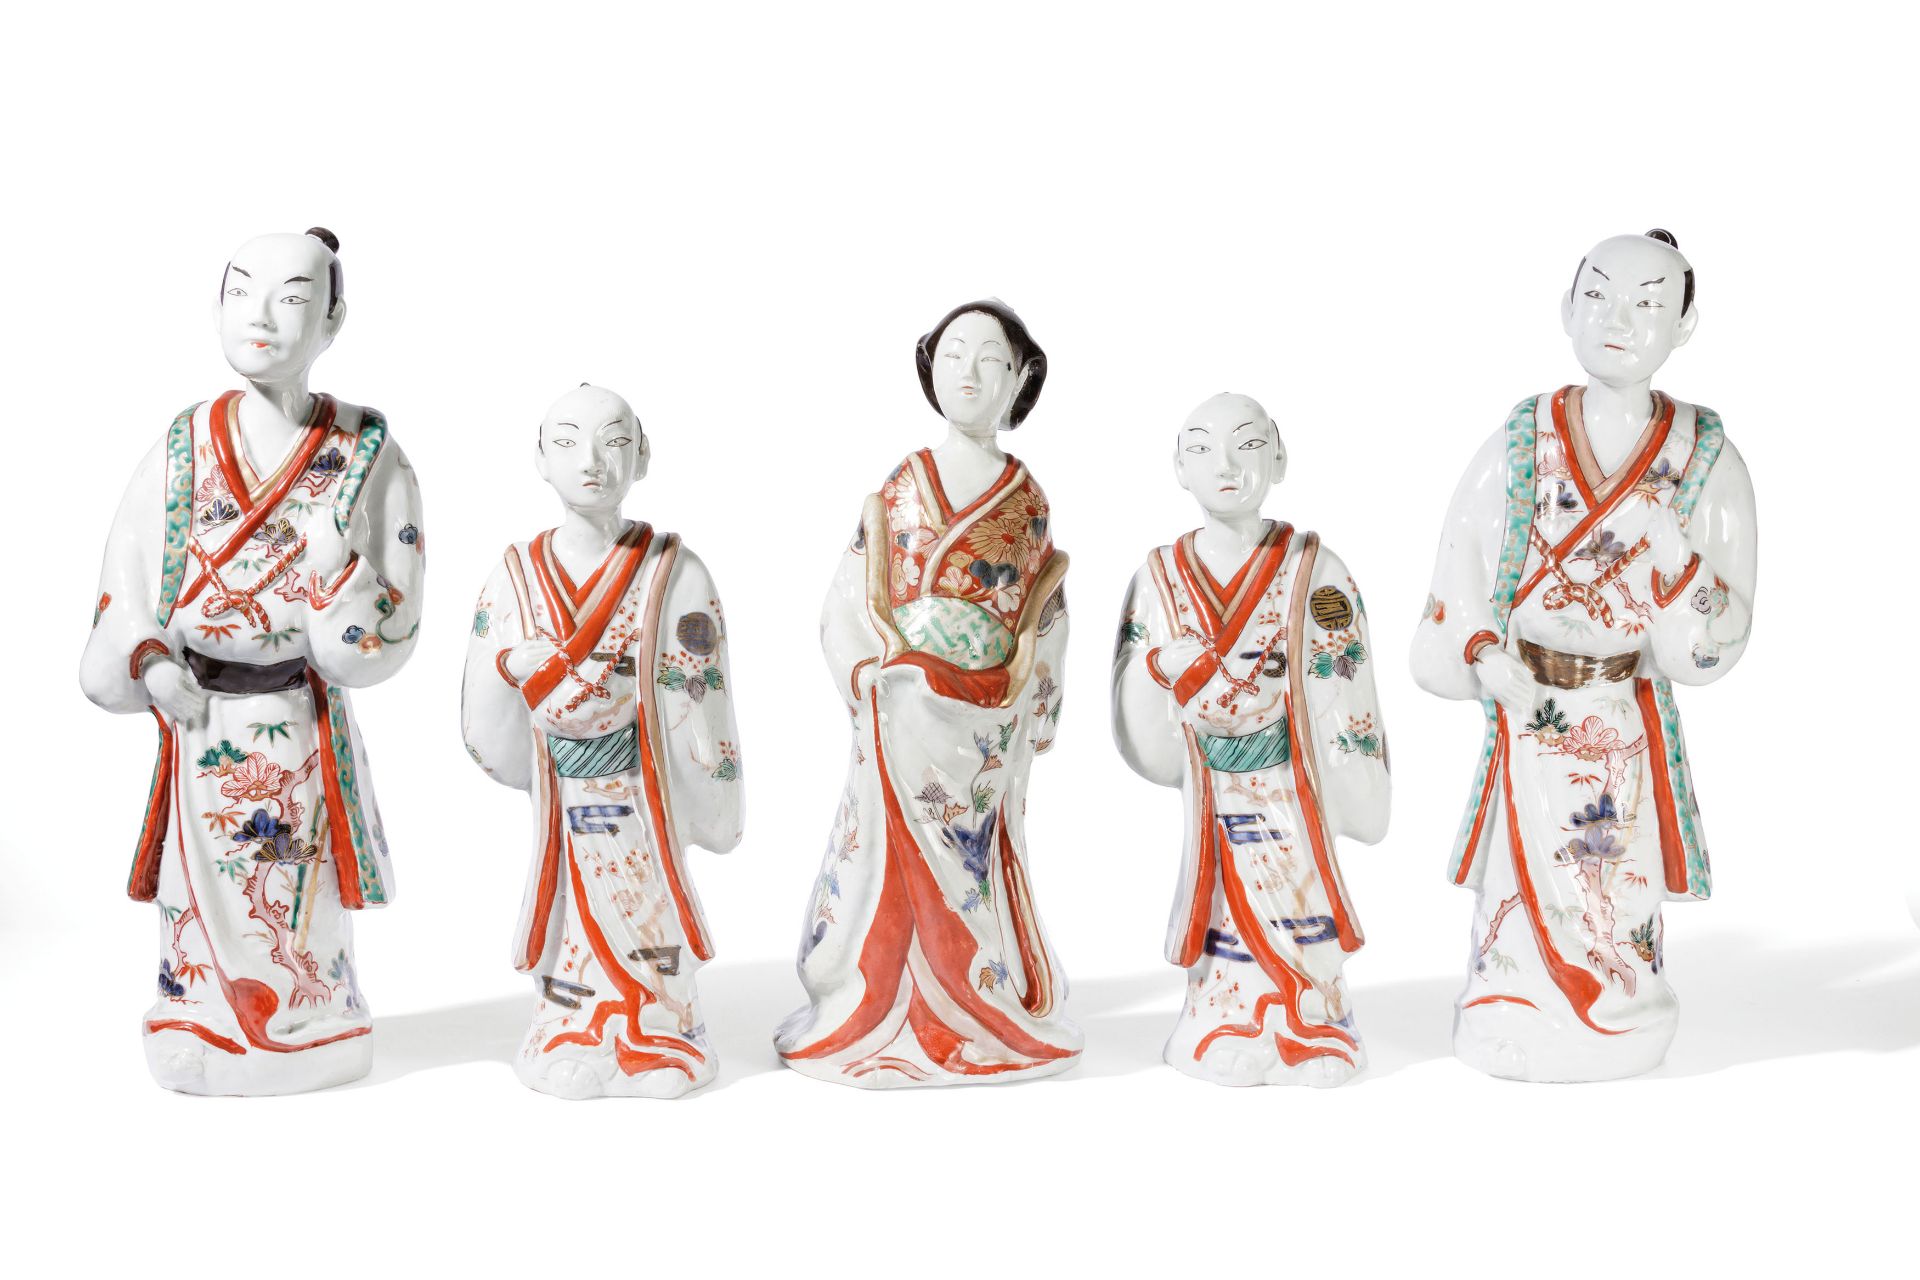 FIVE LARGE STANDING IMARI PORCELAIN FIGURES, JAPAN, EARLY 18TH CENTURY (5)